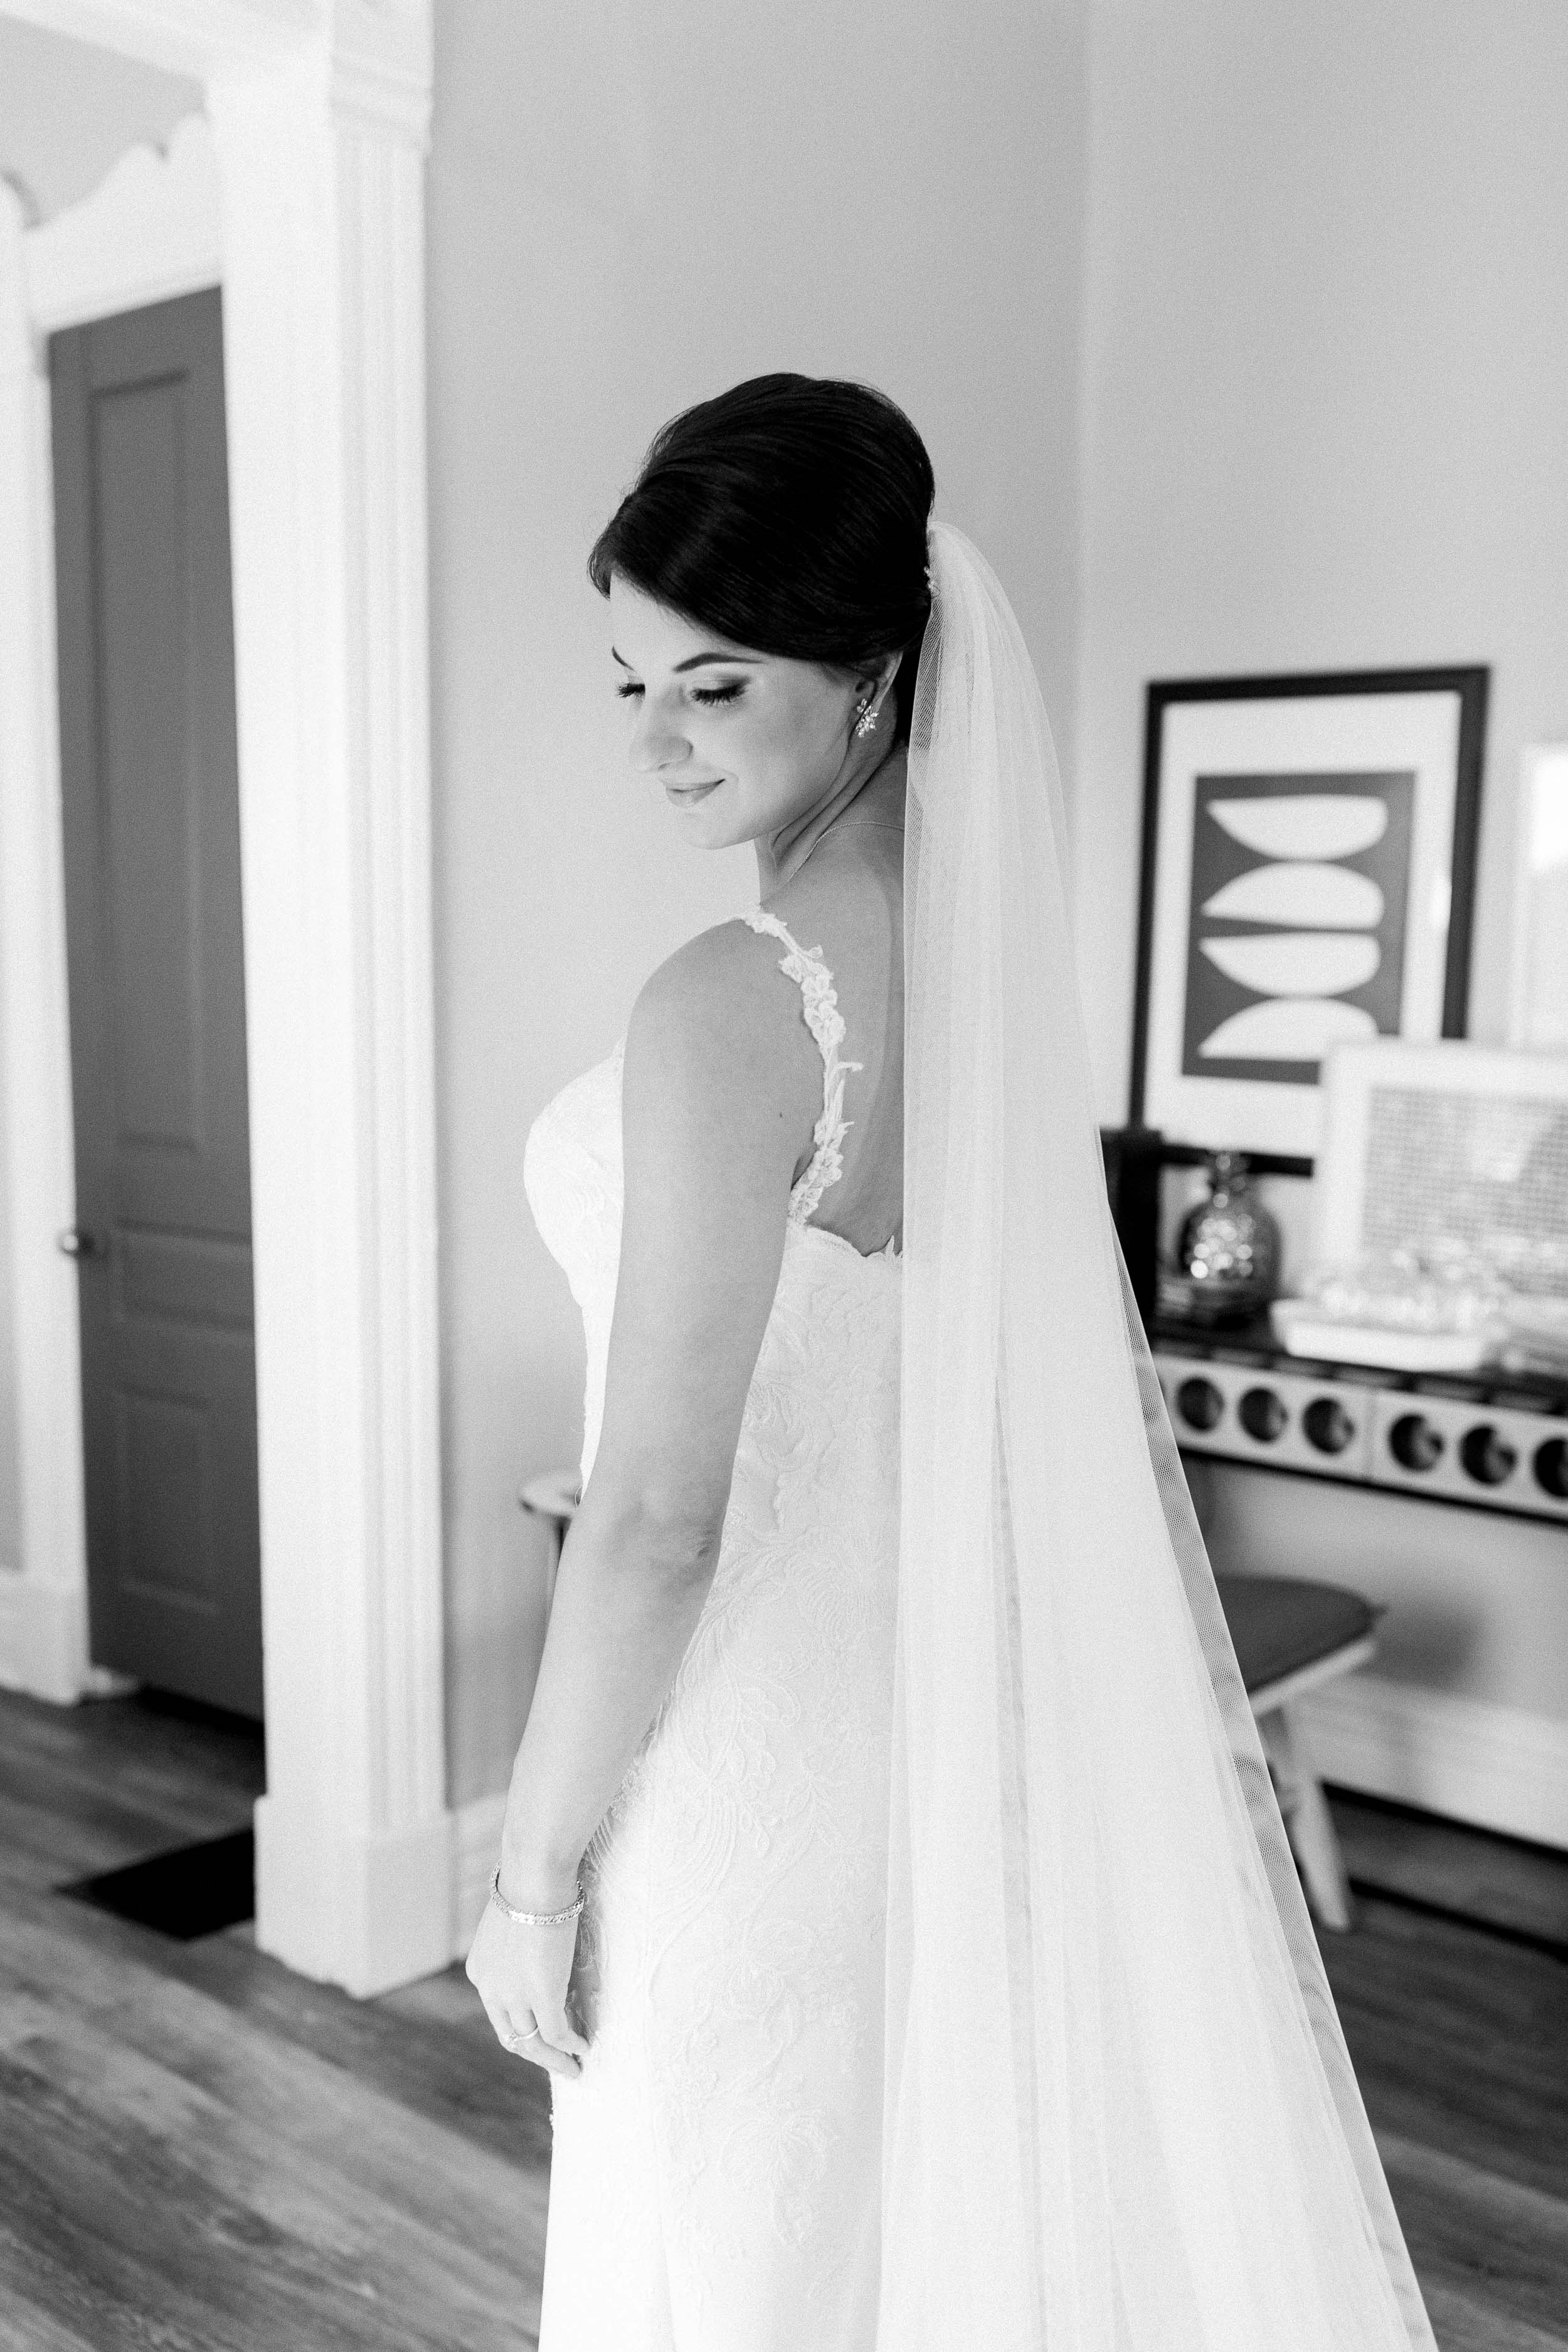 Bridal portrait in black and white